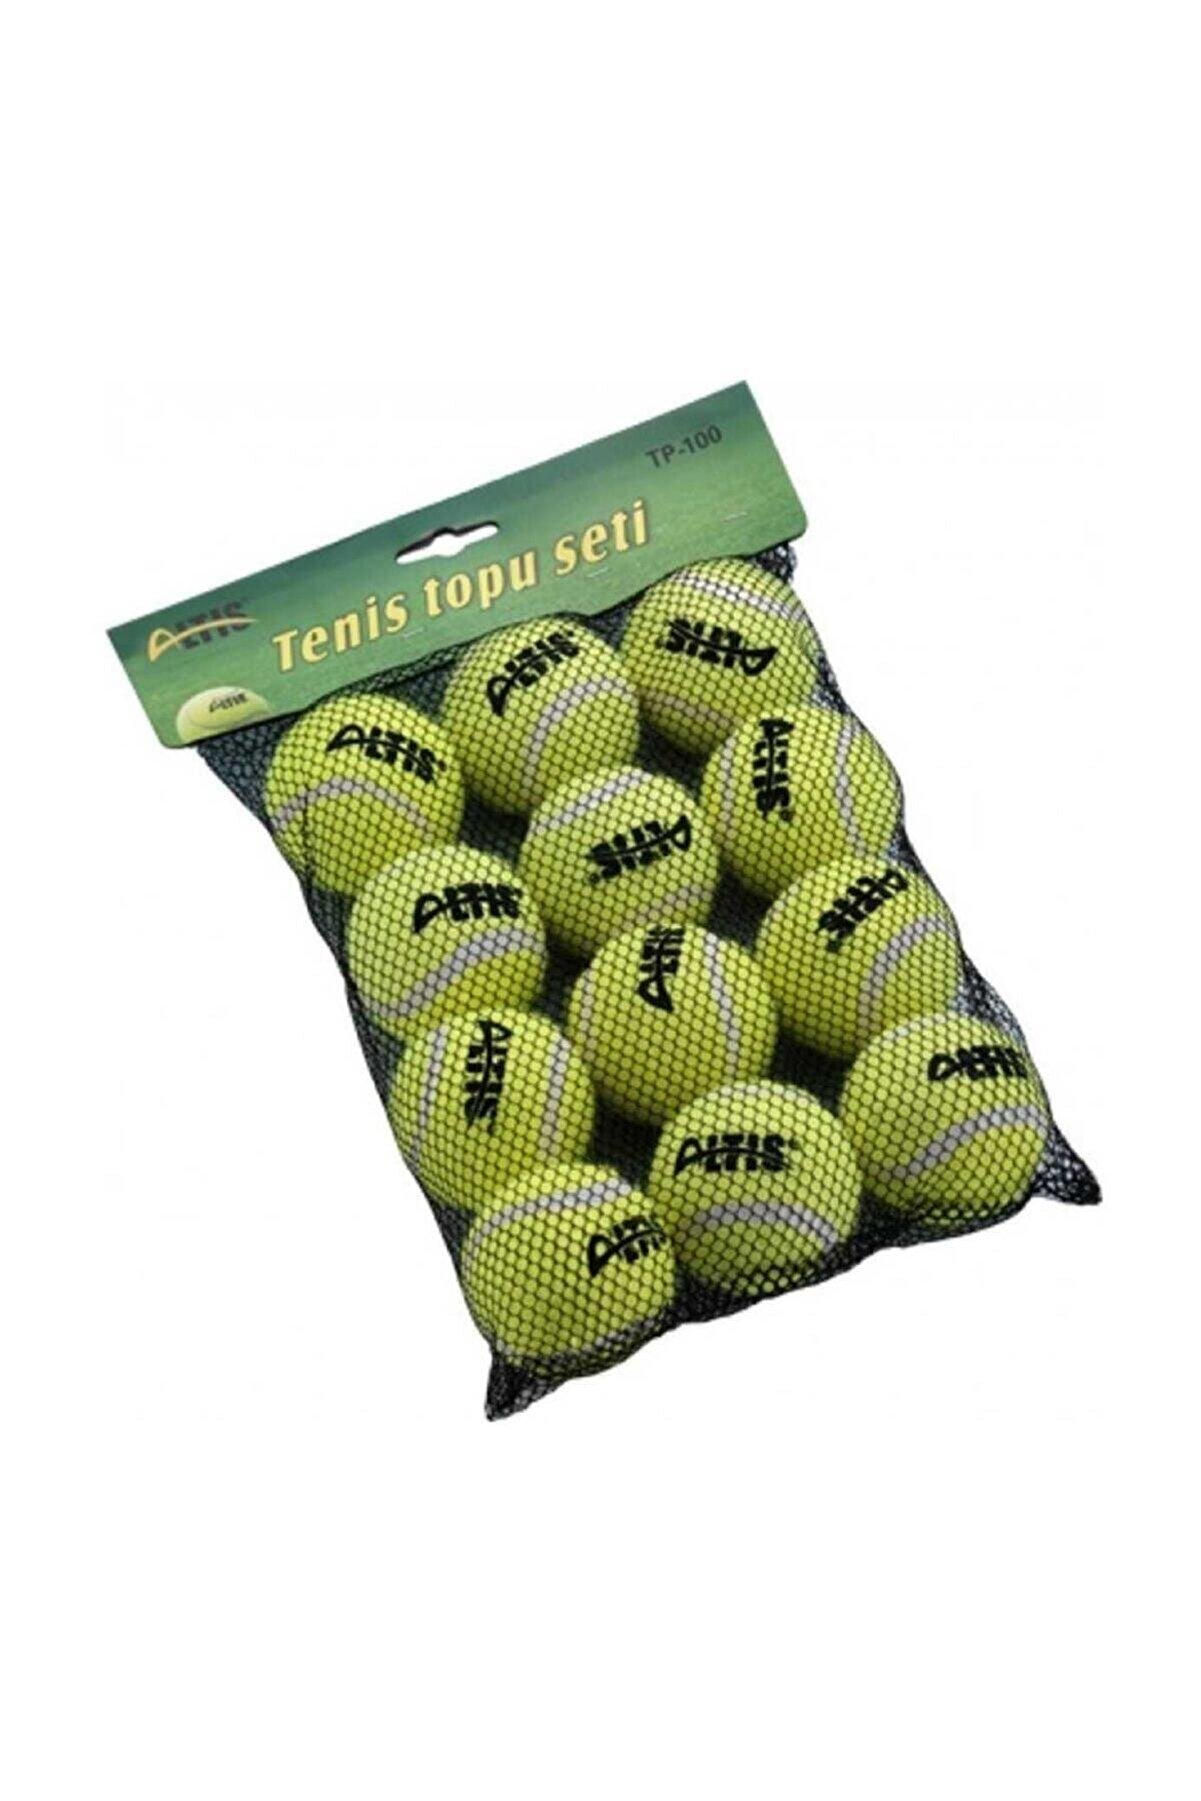 Altis Oyuncak Altis Tp-100 12'li Fileli Tenis Topu Sarı